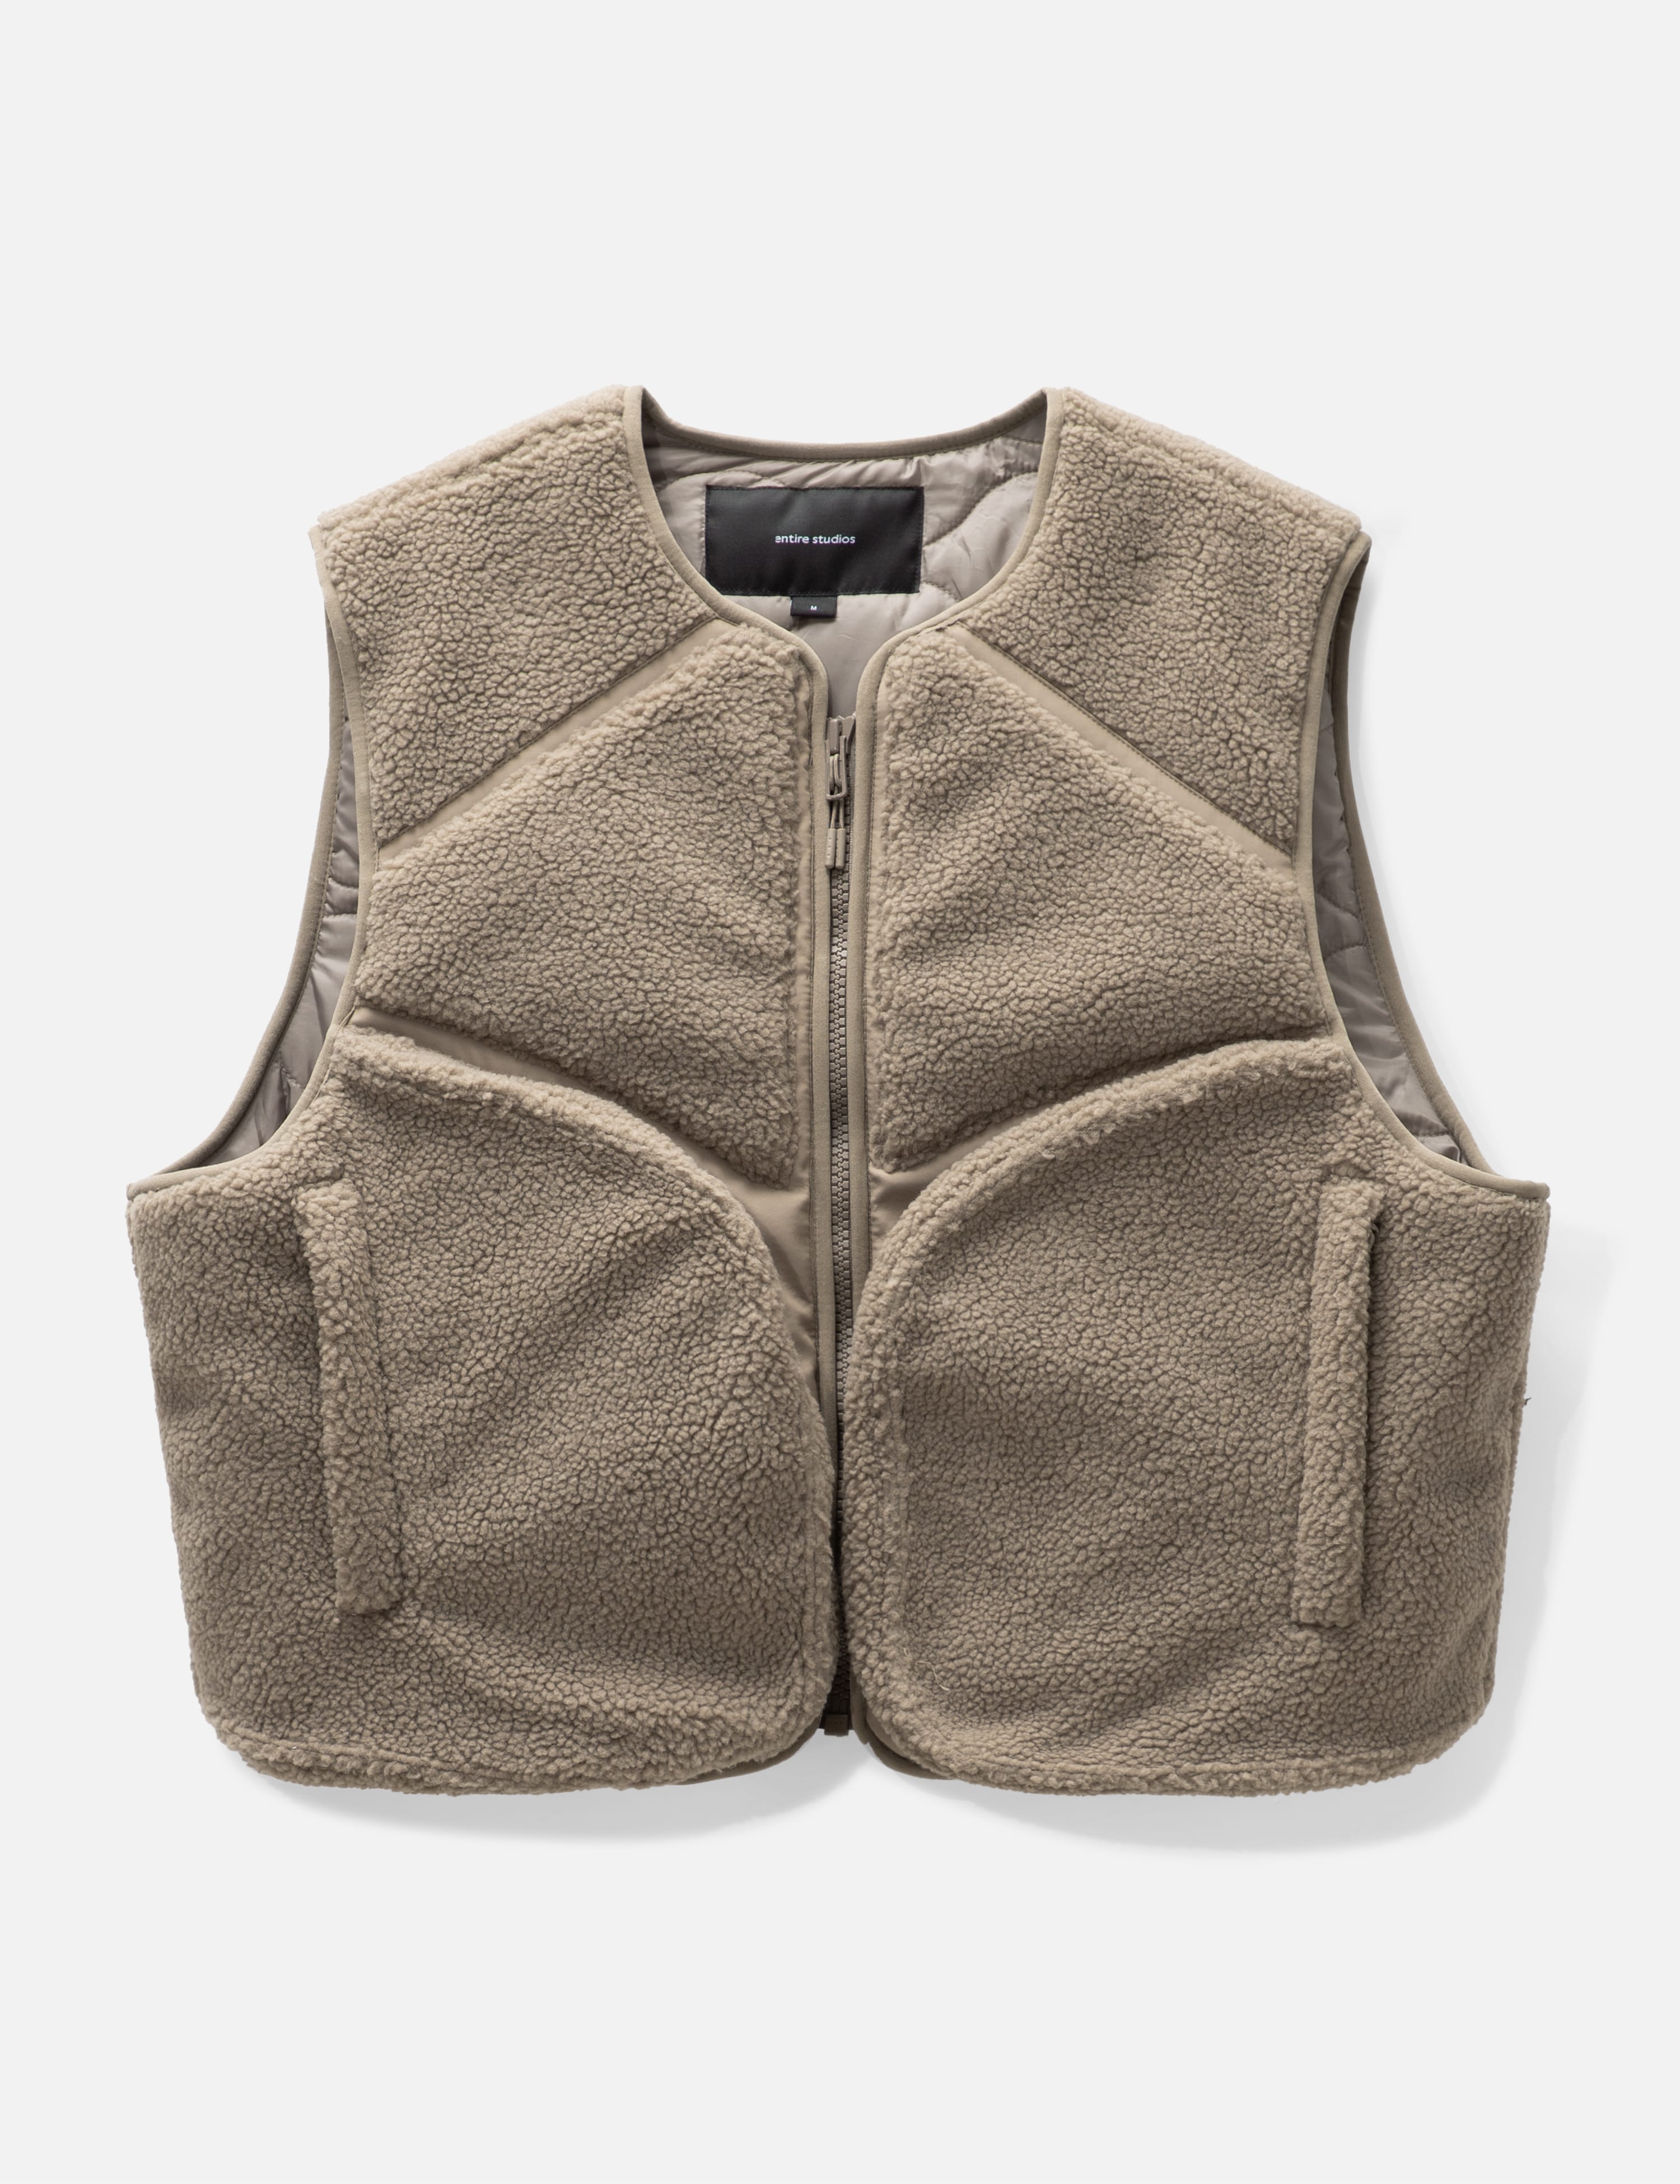 Rotol - Rebuild Knit Vest | HBX - HYPEBEAST 為您搜羅全球潮流時尚品牌